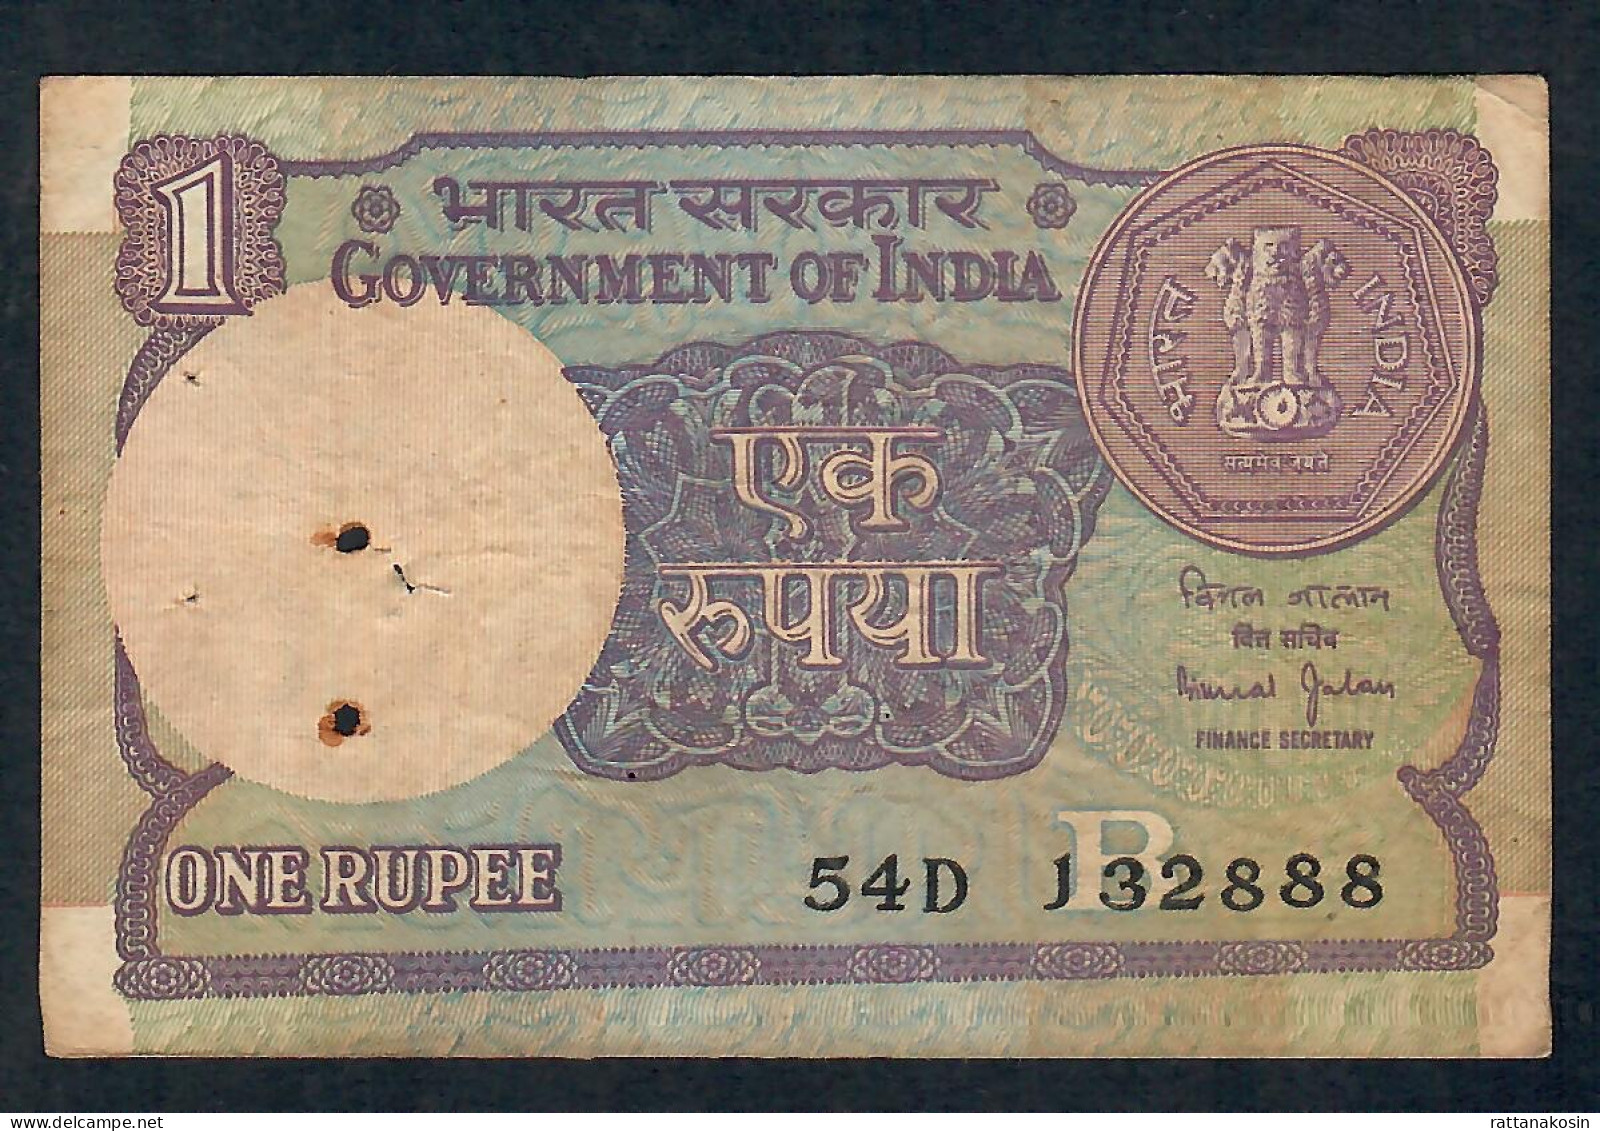 INDIA P78Aj 1 RUPEE 1990  LETTER B Signature JALAN #54D   FINE - Inde